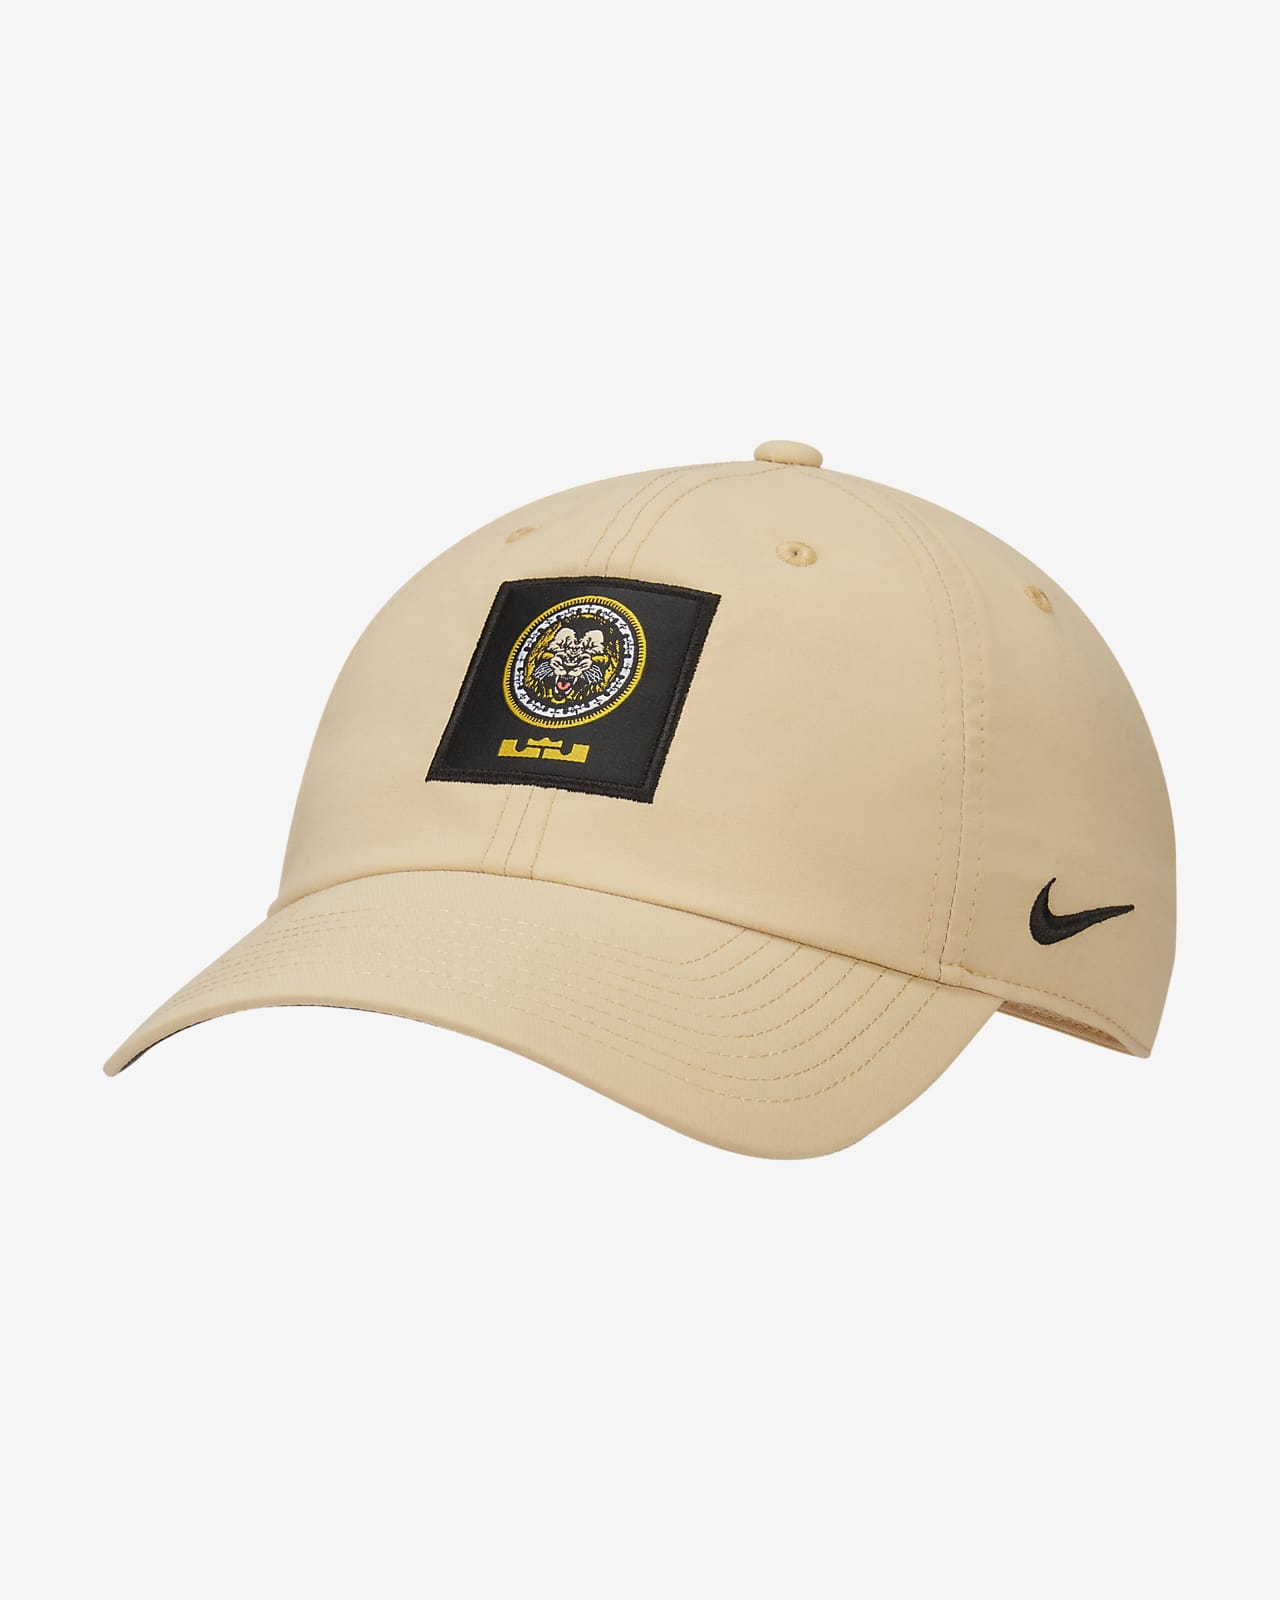 Nike Genuine Merchandise Heritage 86 Dri-fit Hat.